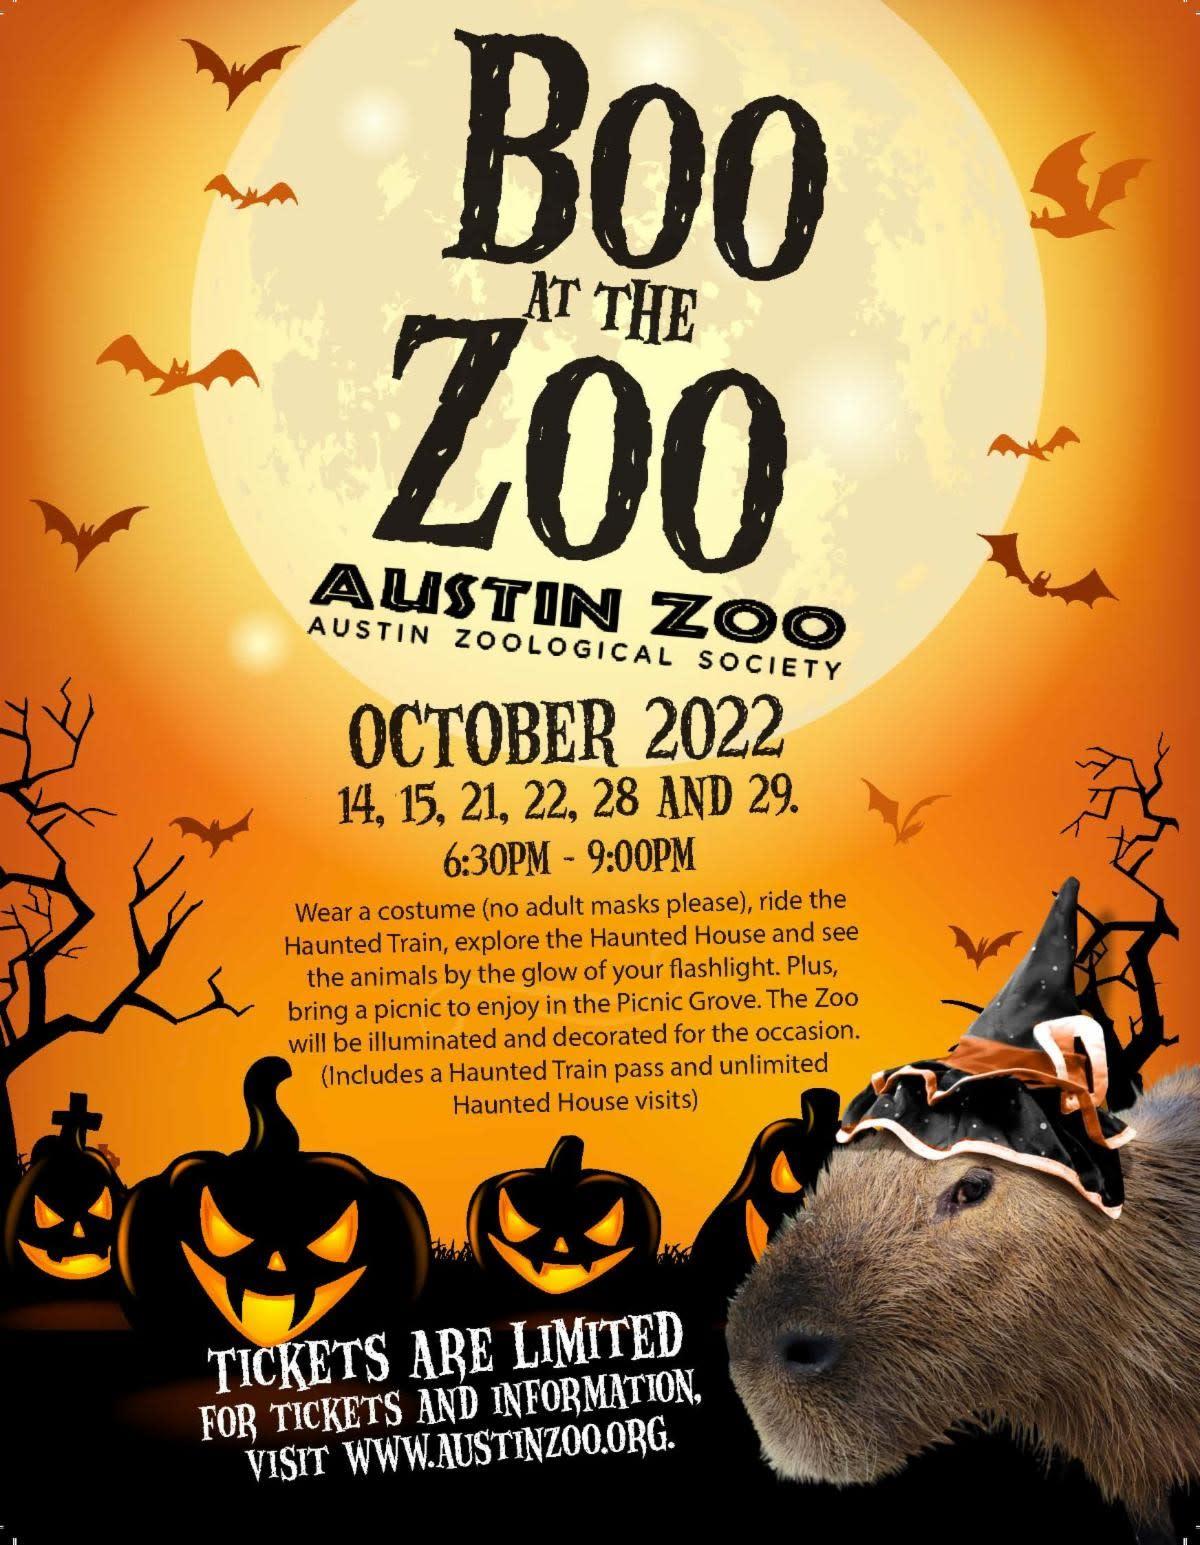 Boo at the Zoo
Fri Oct 14, 6:30 PM - Sat Oct 29, 9:00 PM